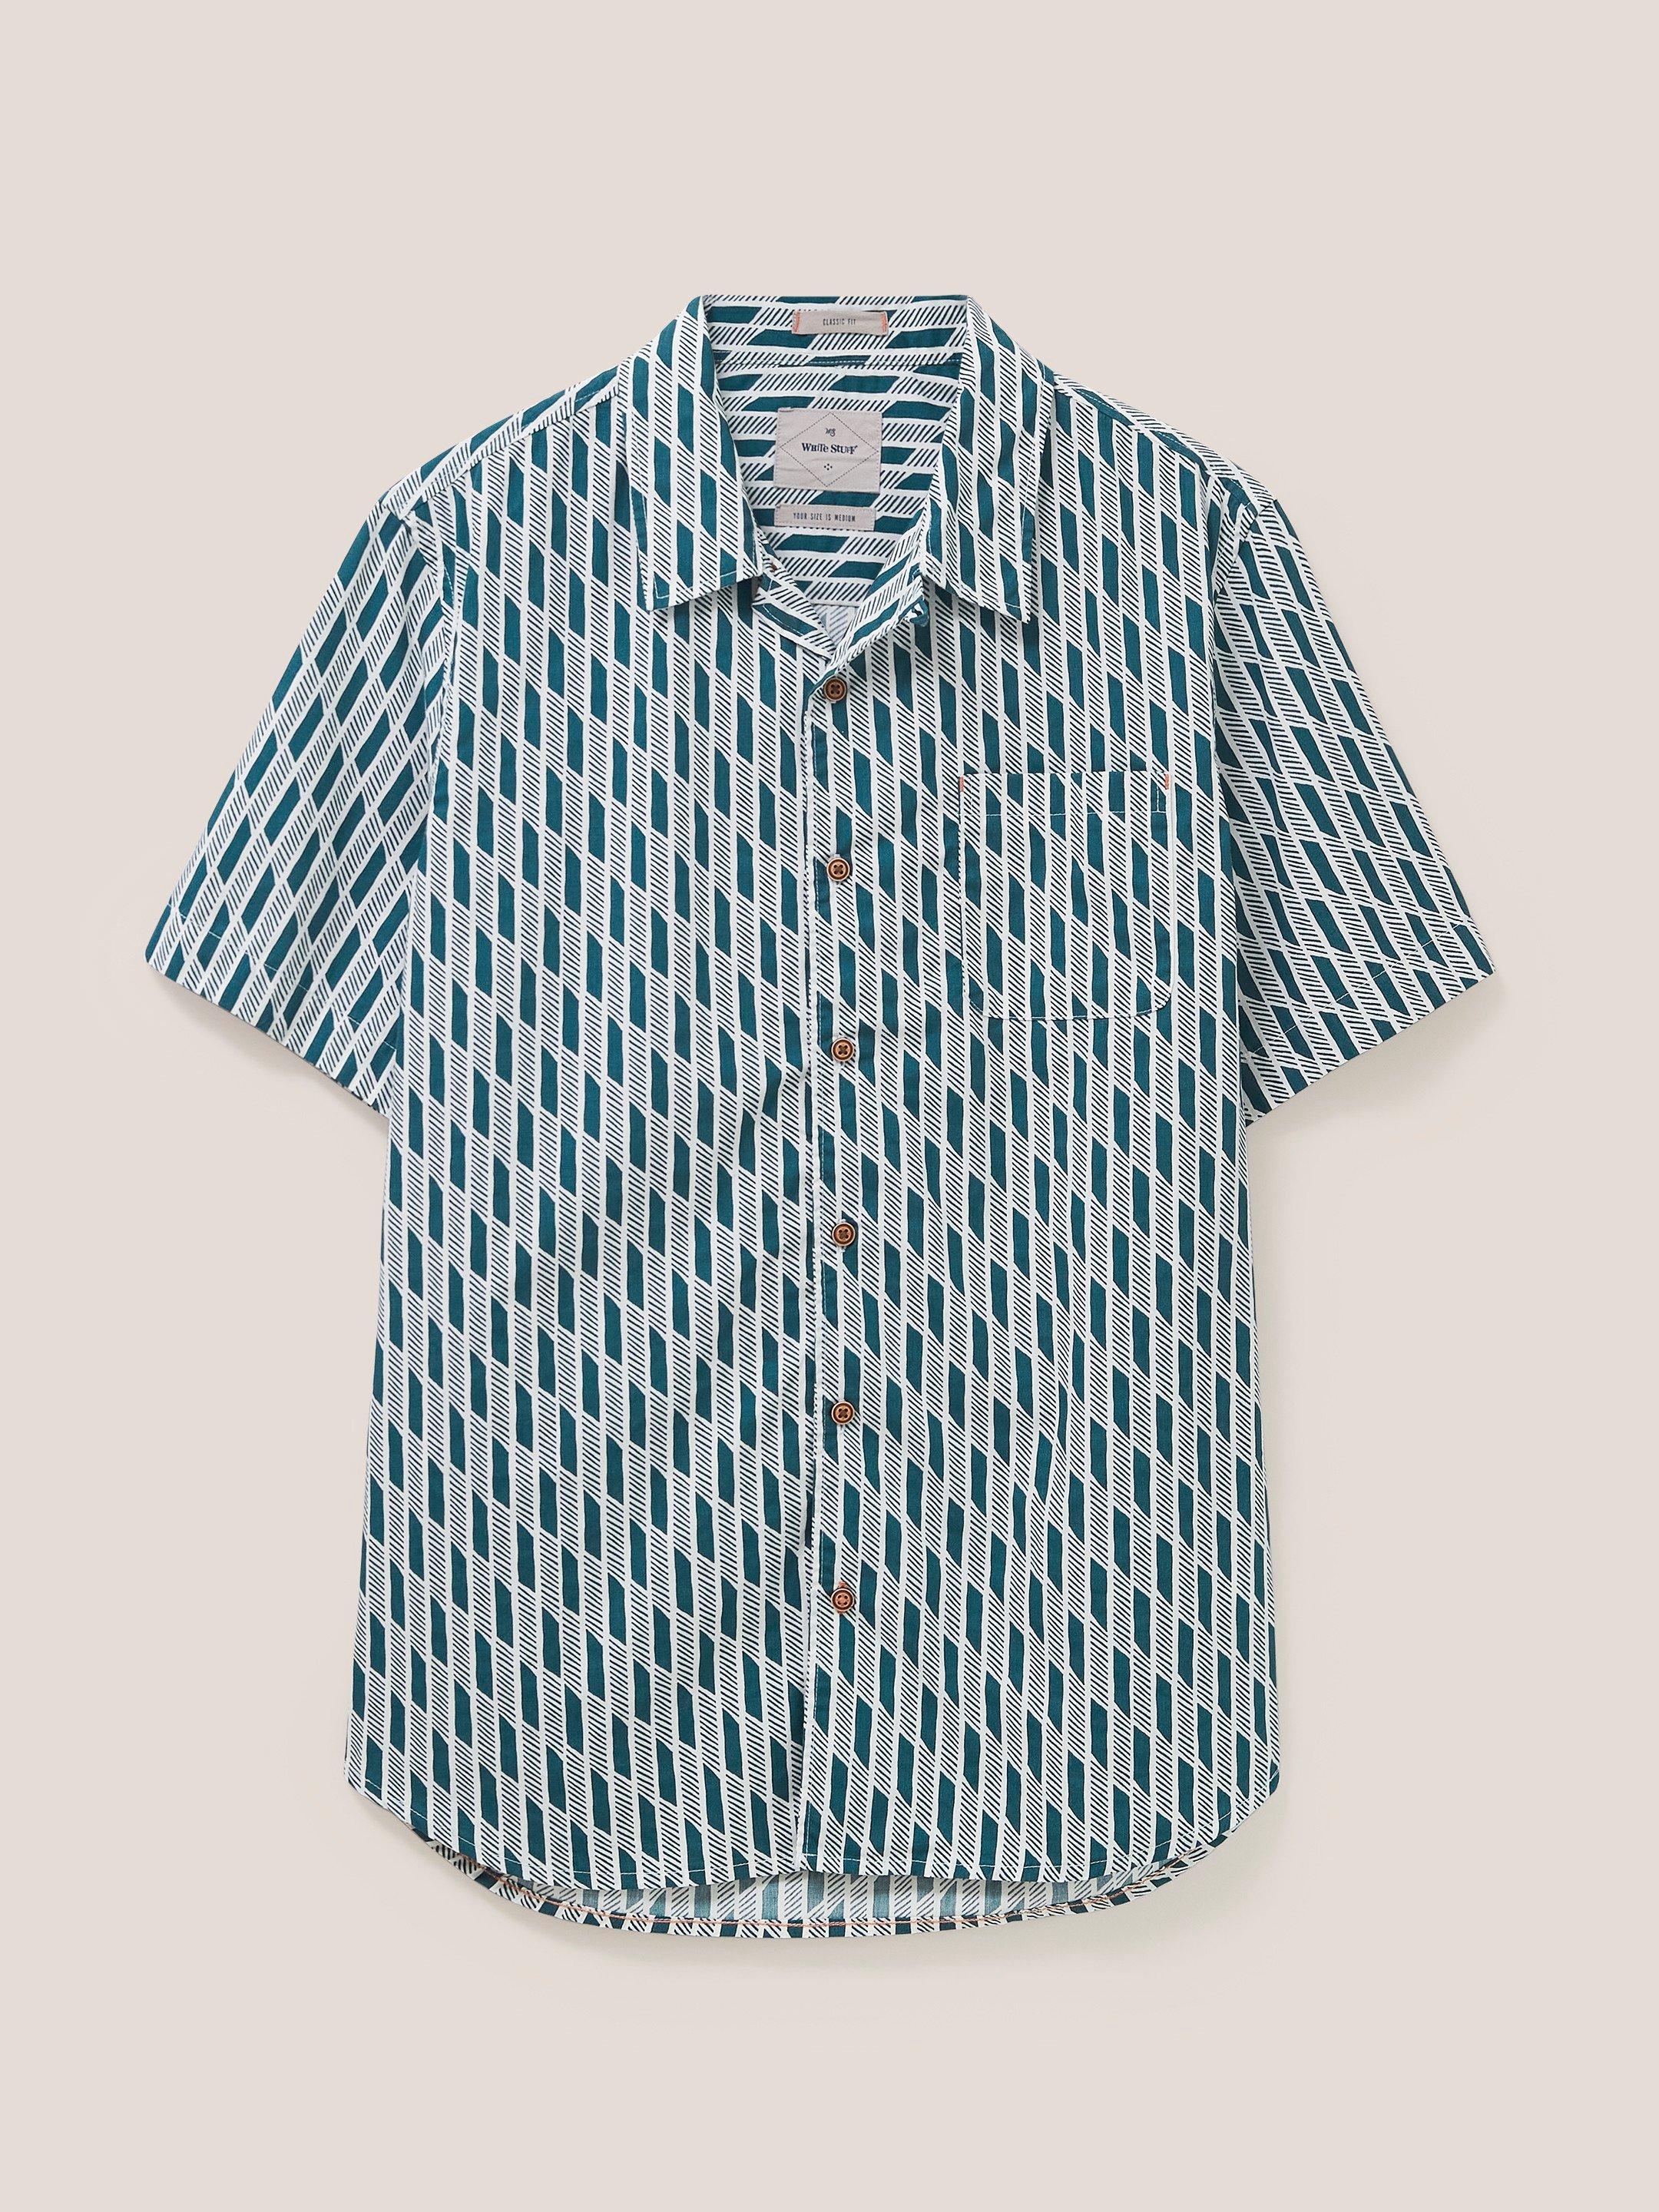 Dash Tile Printed Shirt in BLUE PR - FLAT FRONT